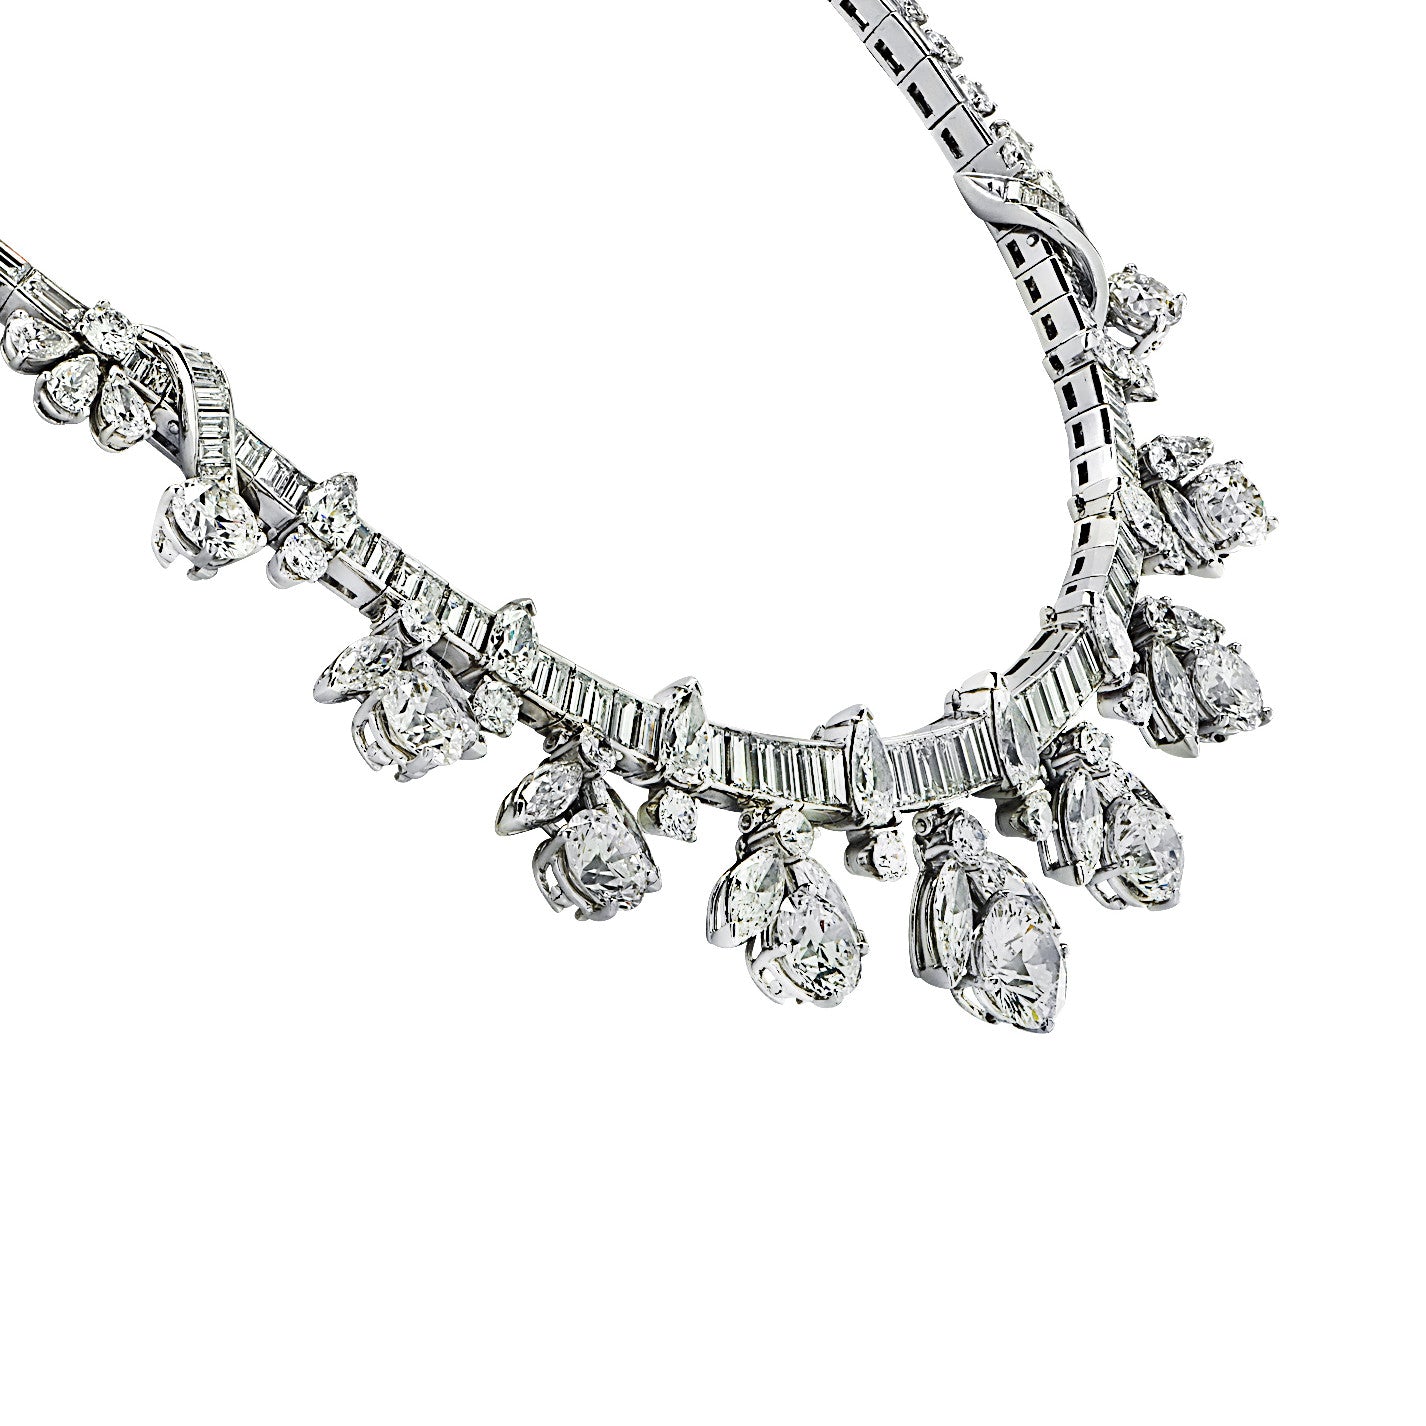 1960s Platinum Diamond Cluster Necklace close-up side view